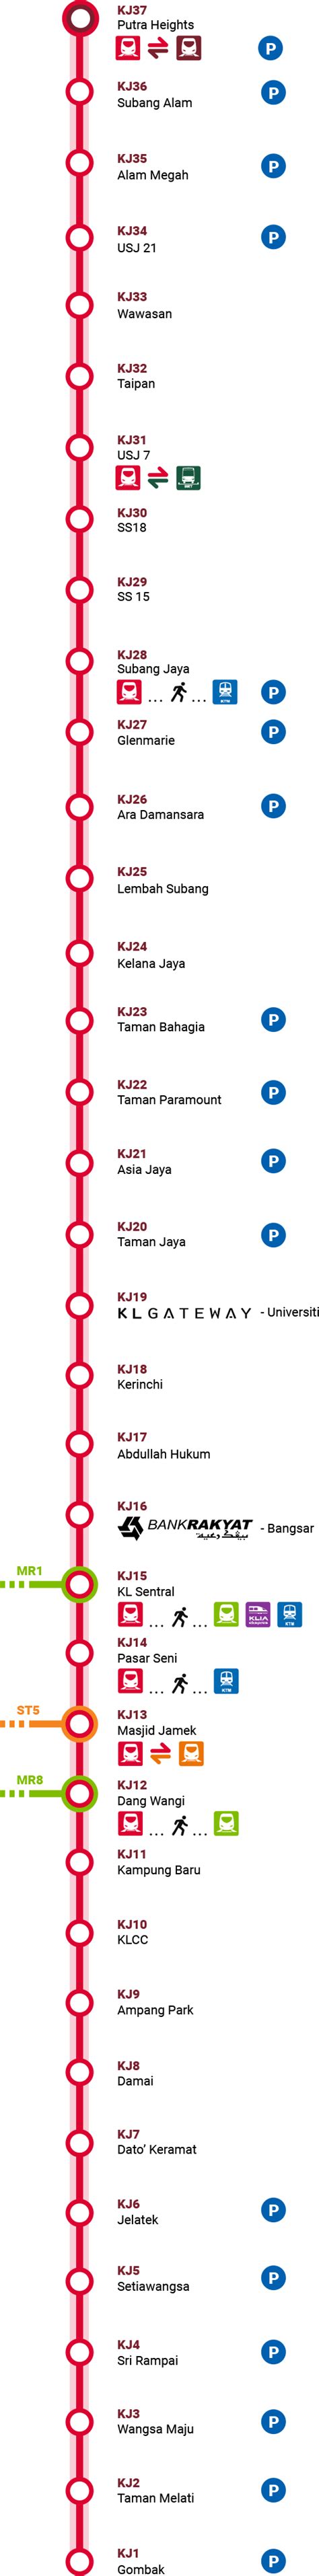 Kelana jaya lrt station is a light rail station on the kelana jaya line. Monorail and LRTs